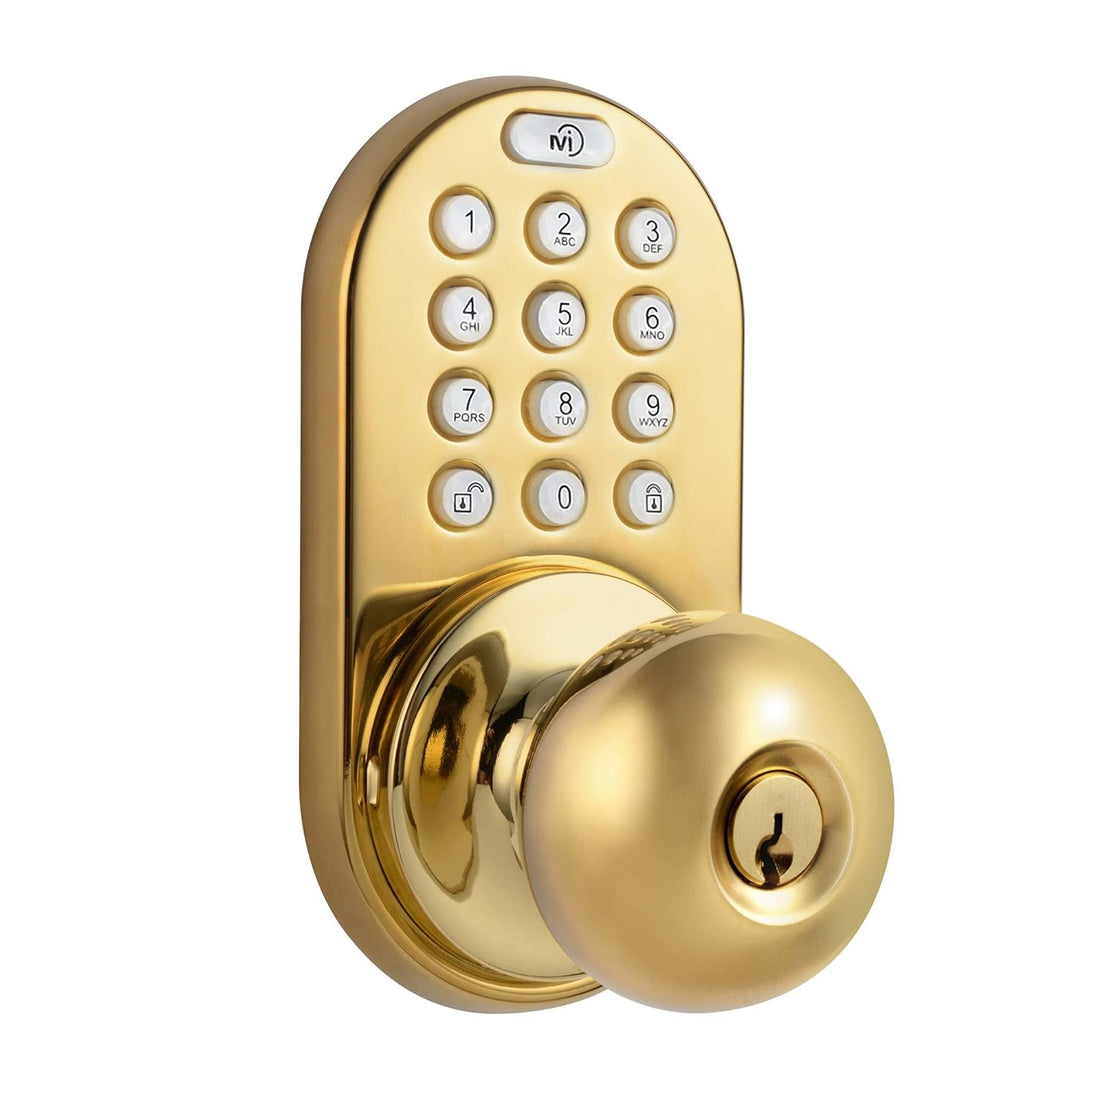 MiLocks DKK-02P Electronic Touchpad Entry Keyless Door Lock, Polished Brass